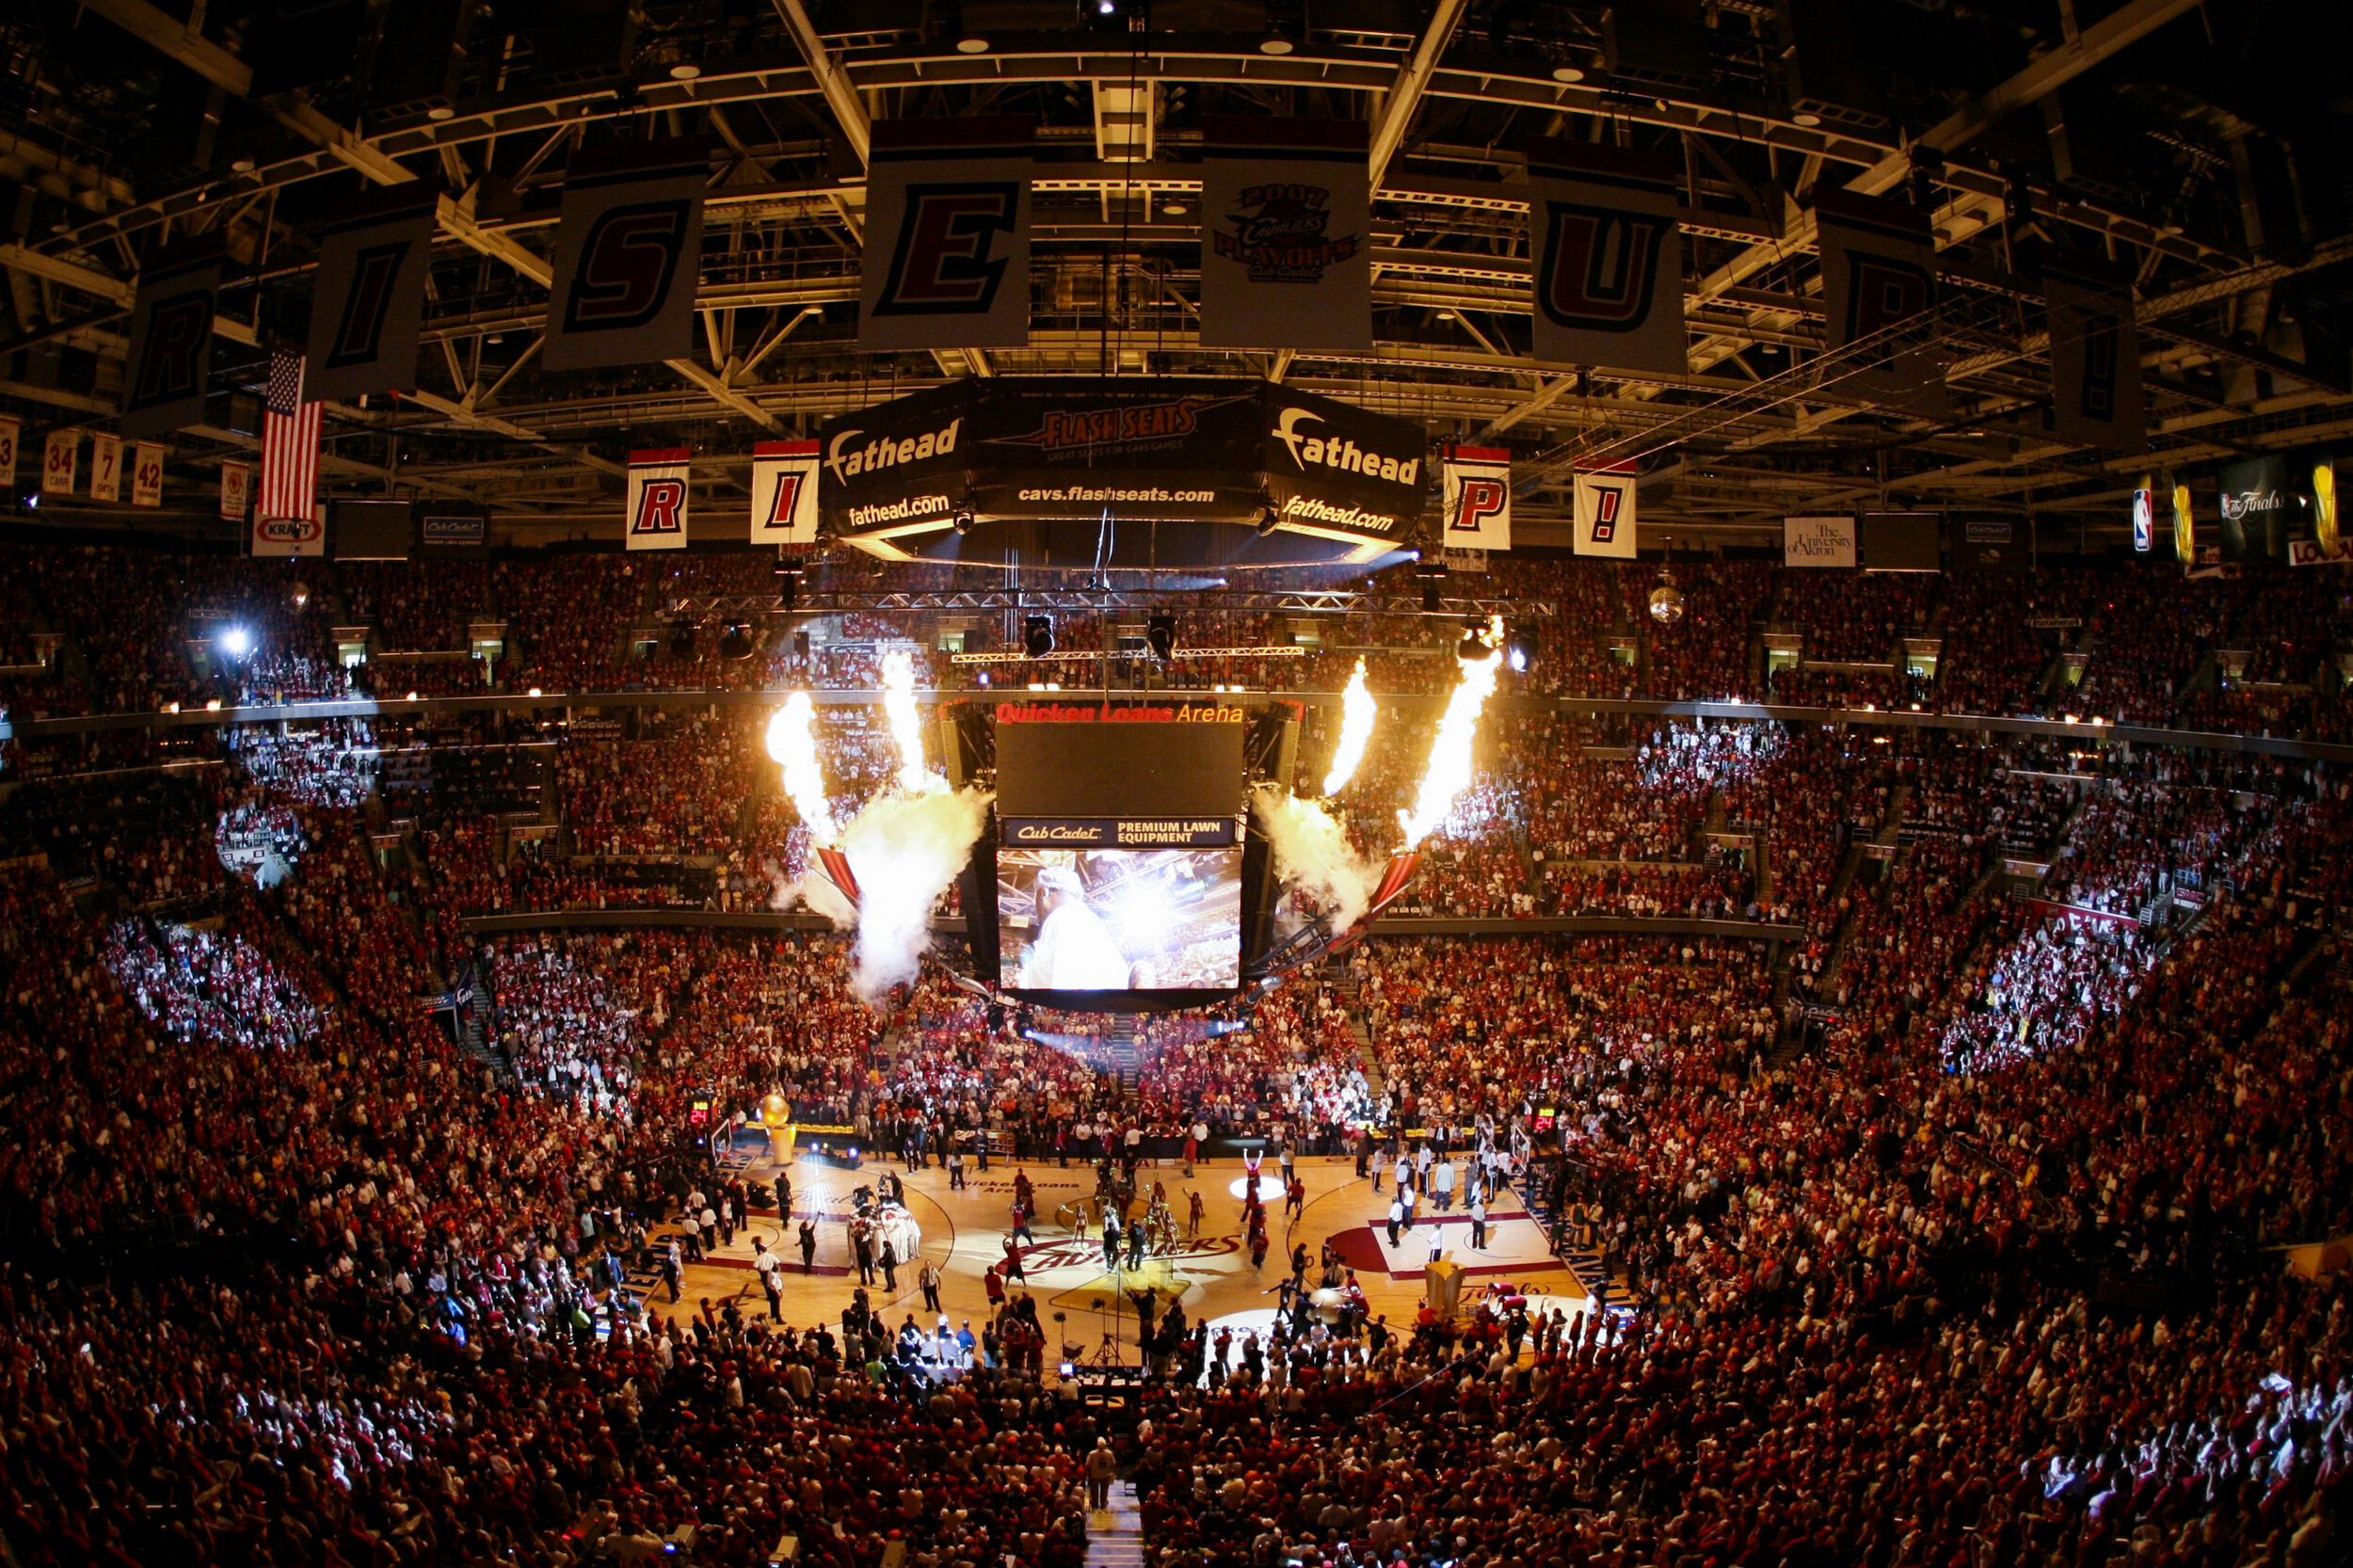  Quicken Loans Arena  NBA Finals, 2007 